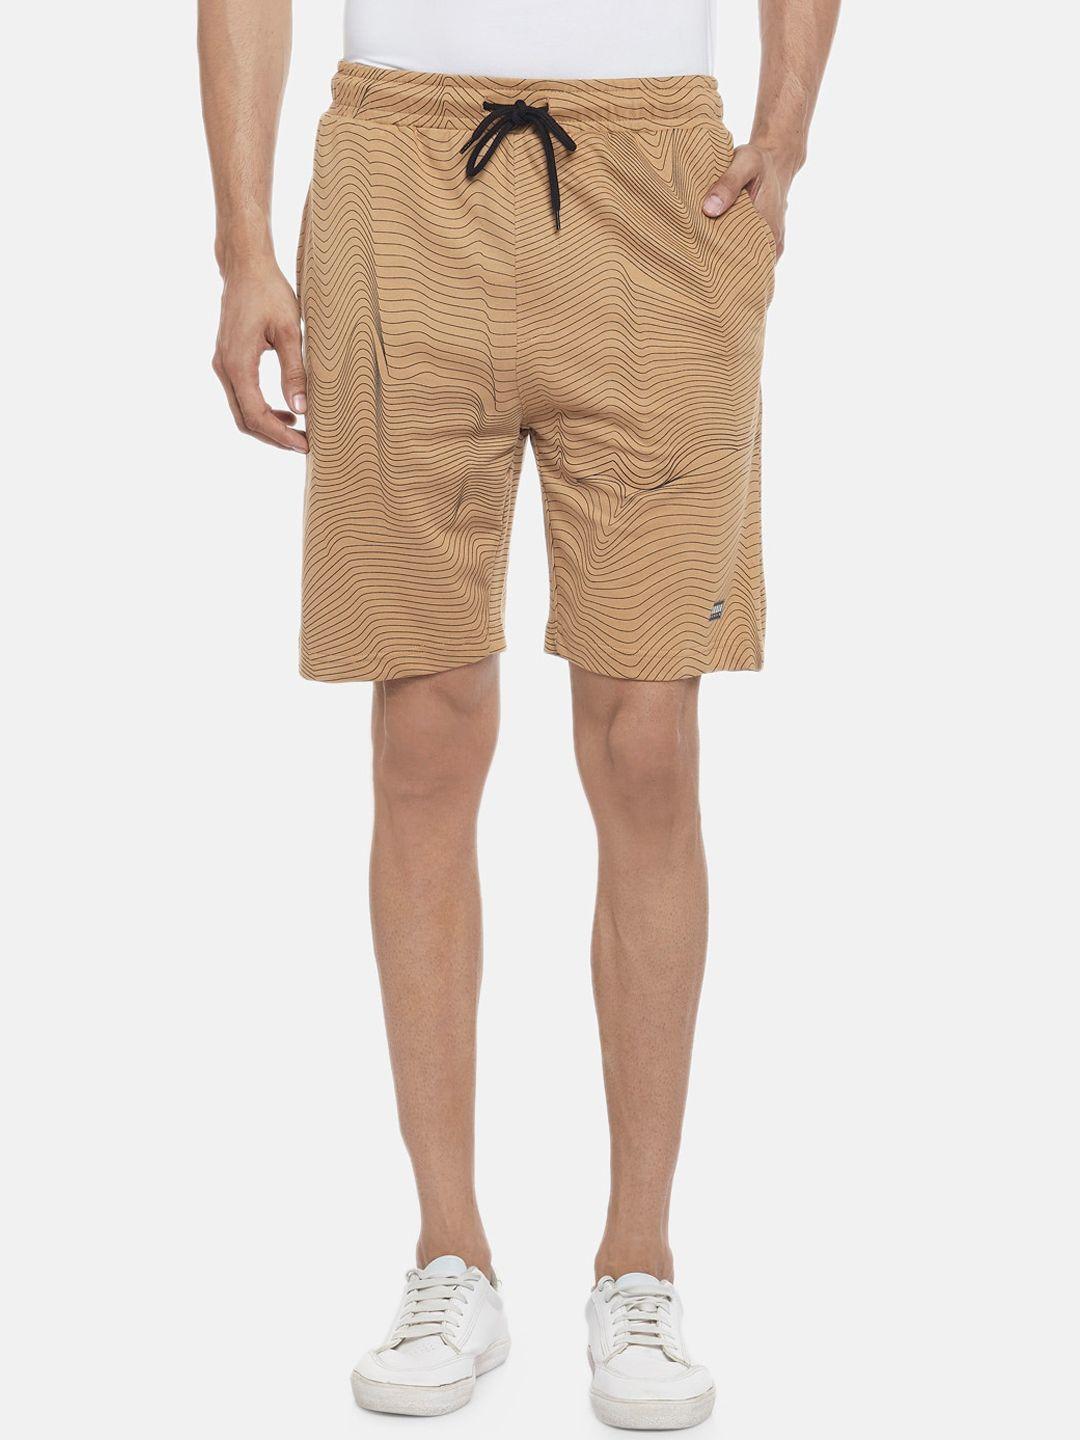 urban ranger by pantaloons men khaki printed slim fit pure cotton chino shorts